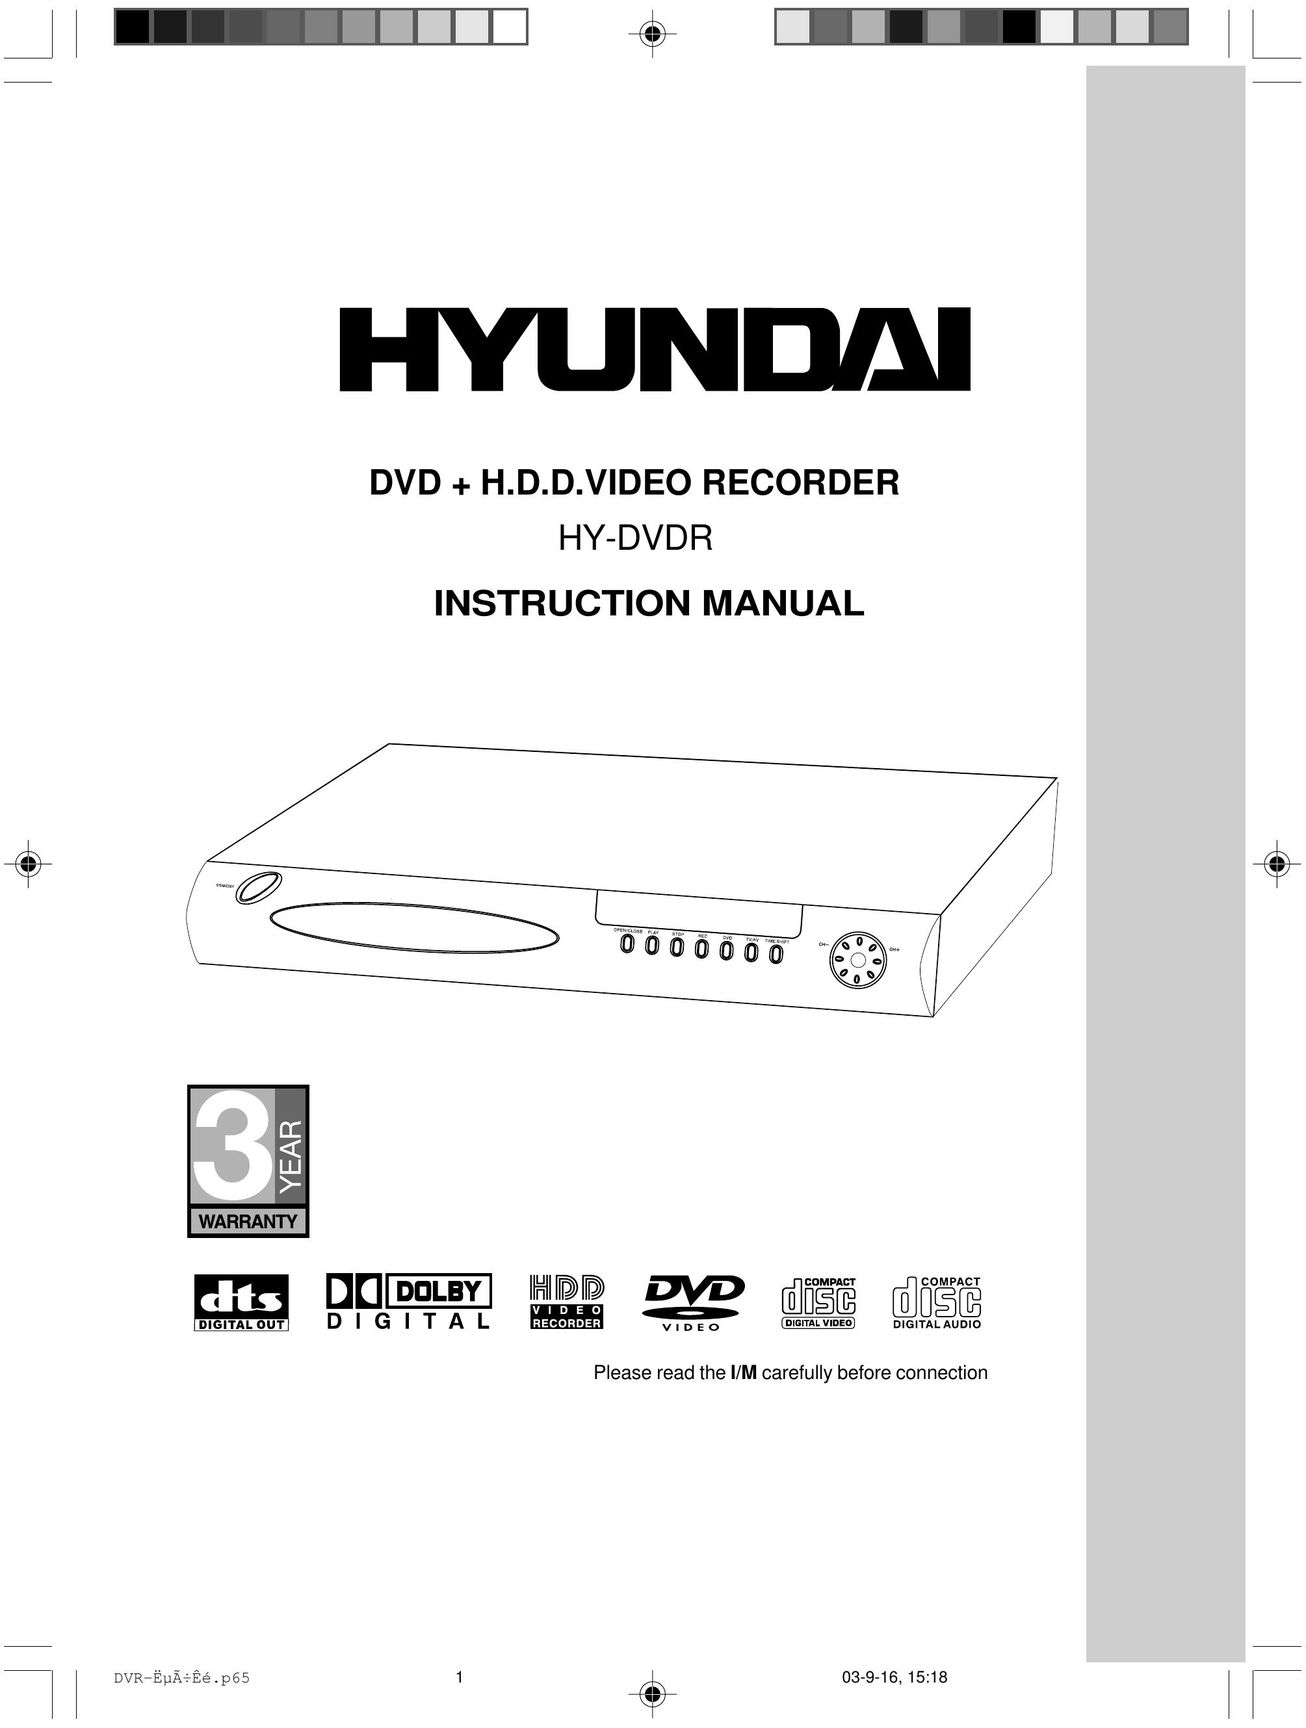 Hyundai IT HY-DVDR DVR User Manual